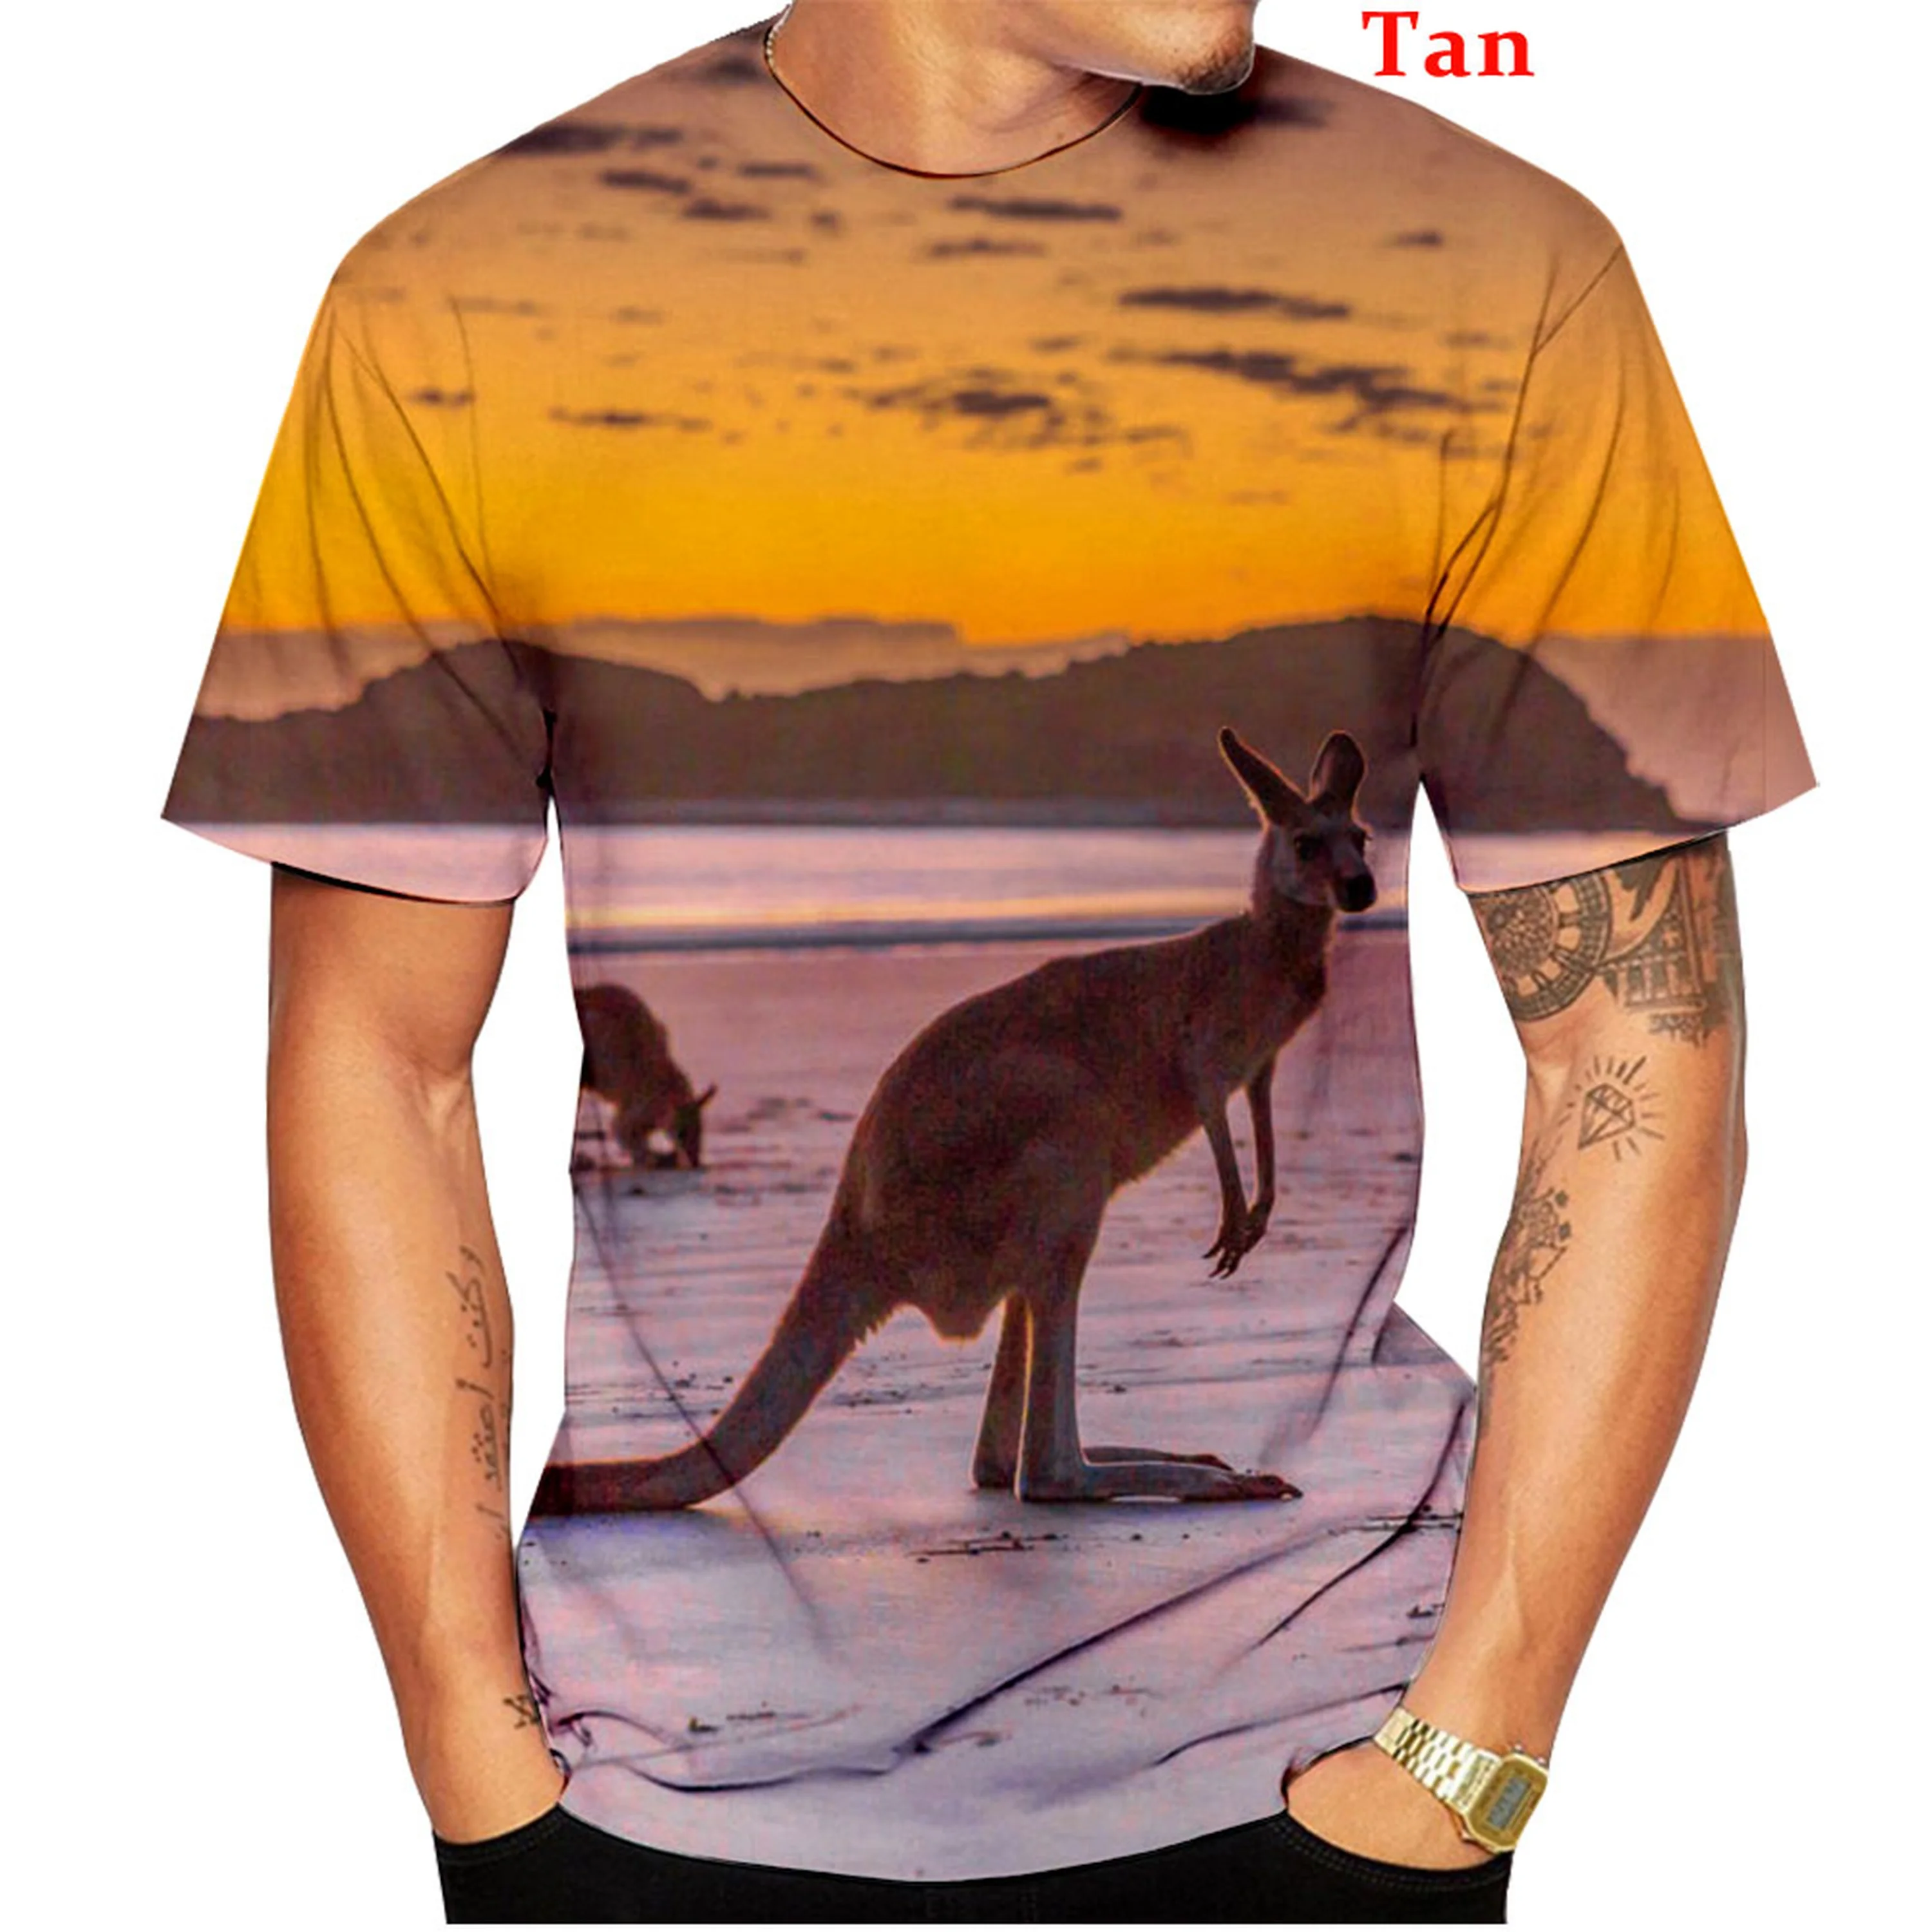 Jungle wildlife Animal kangaroo 3d Printed T-shirt for Men